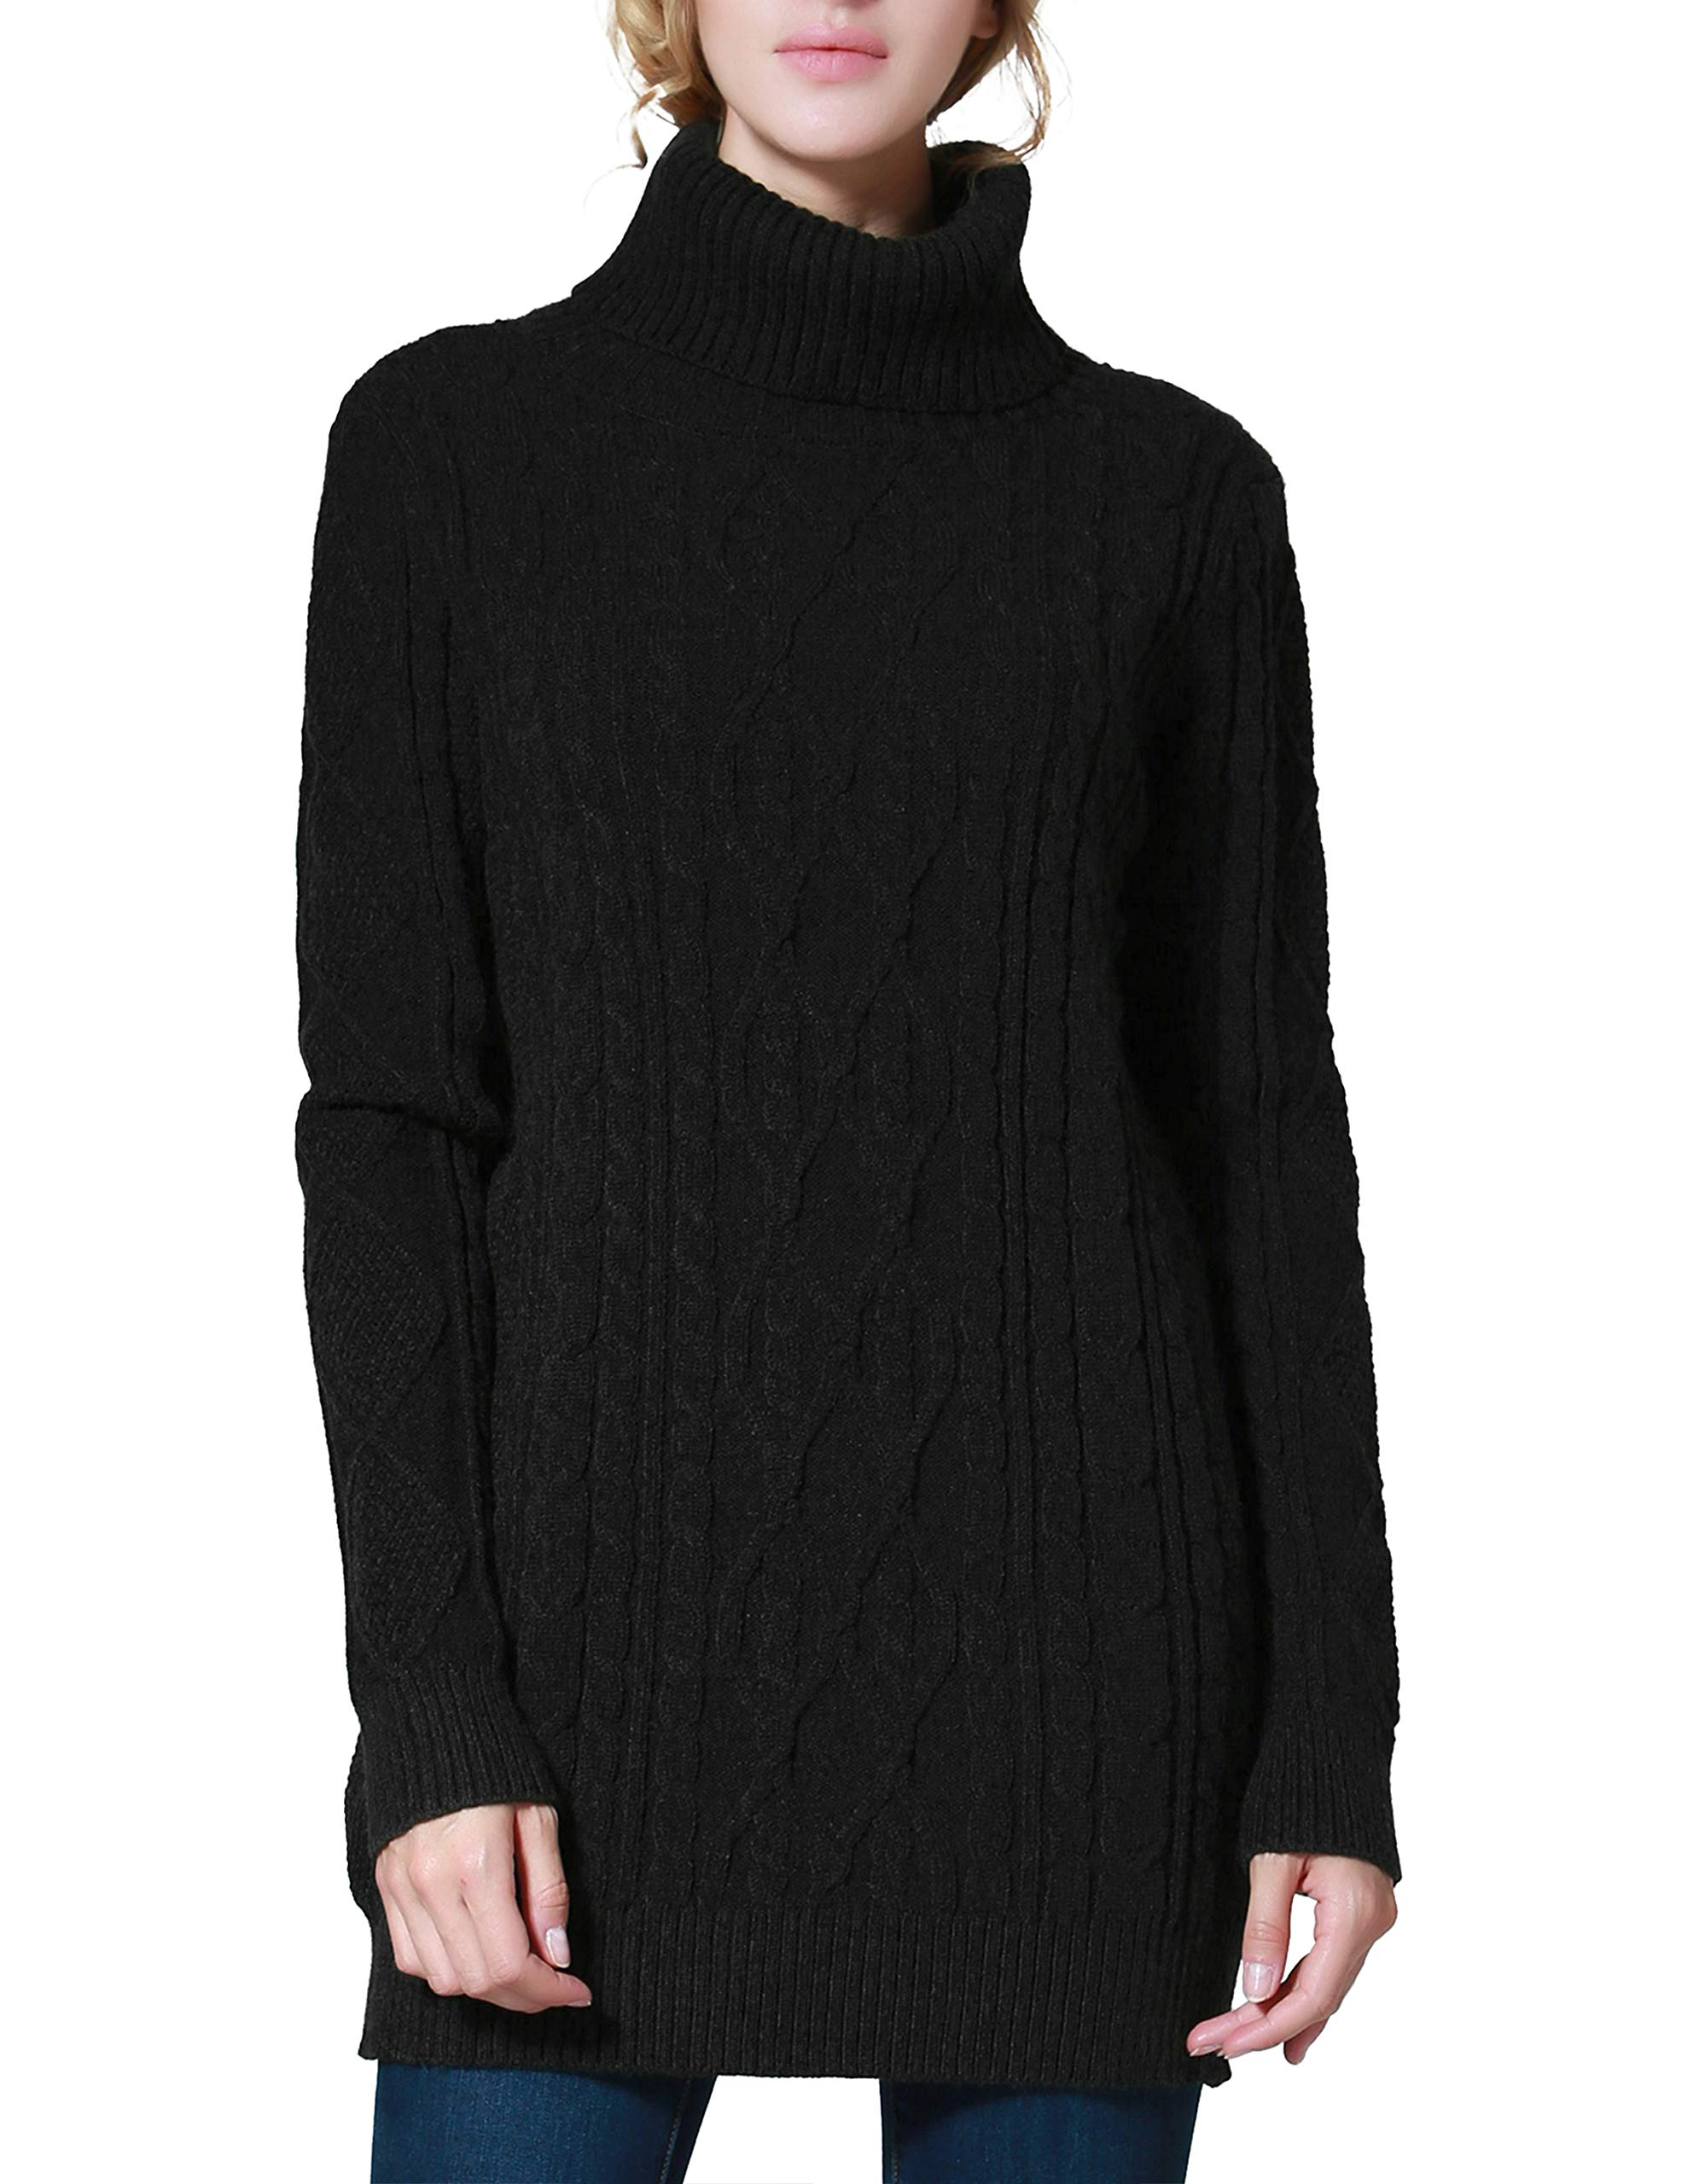 PrettyGuide Women's Long Sweater Turtleneck Pullover Tunic Sweater Tops ...